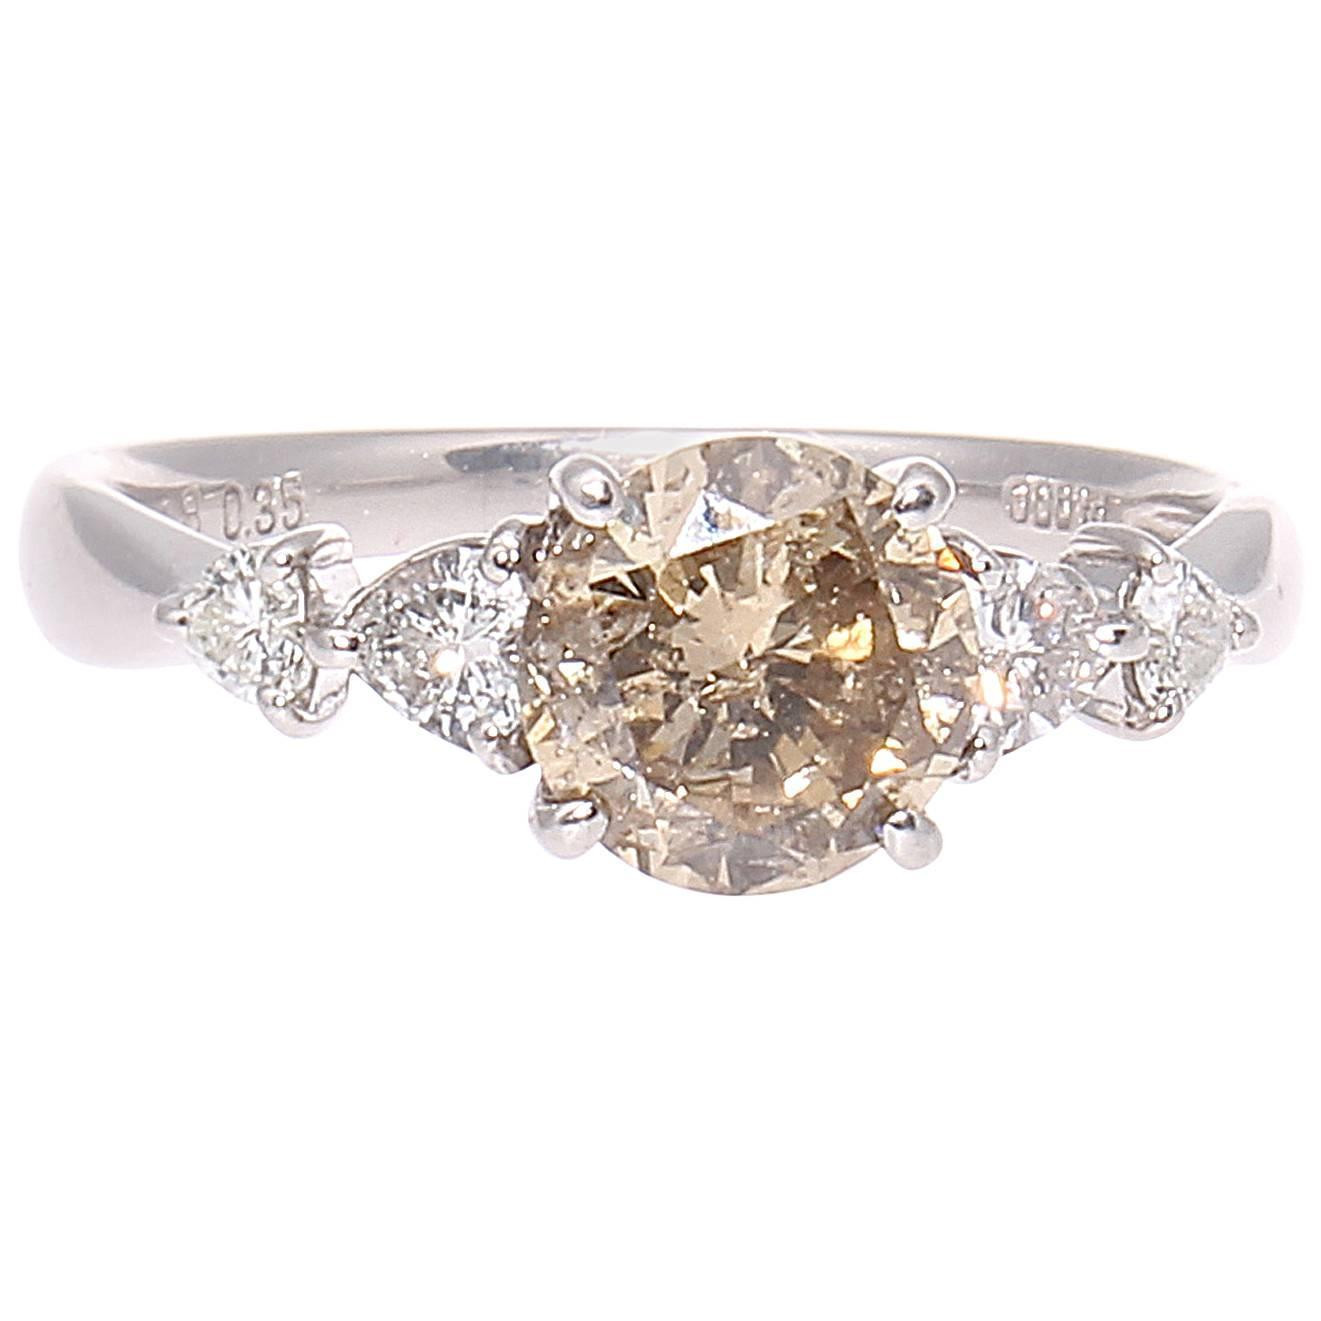 Colored Diamond Engagement Rings
 Light Champagne Colored Diamond Platinum Engagement Ring